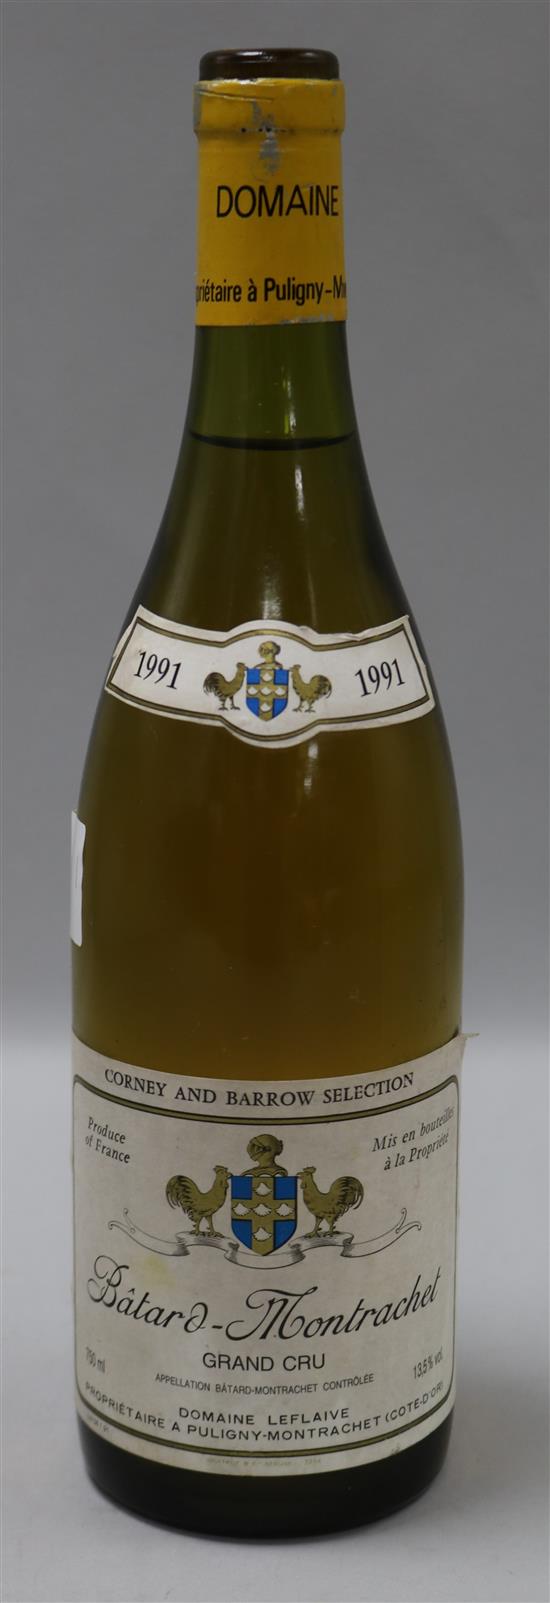 A 1991 Batard-Montrachet Grand Cru, Cote de Beaune Domaine Leflaive white wine